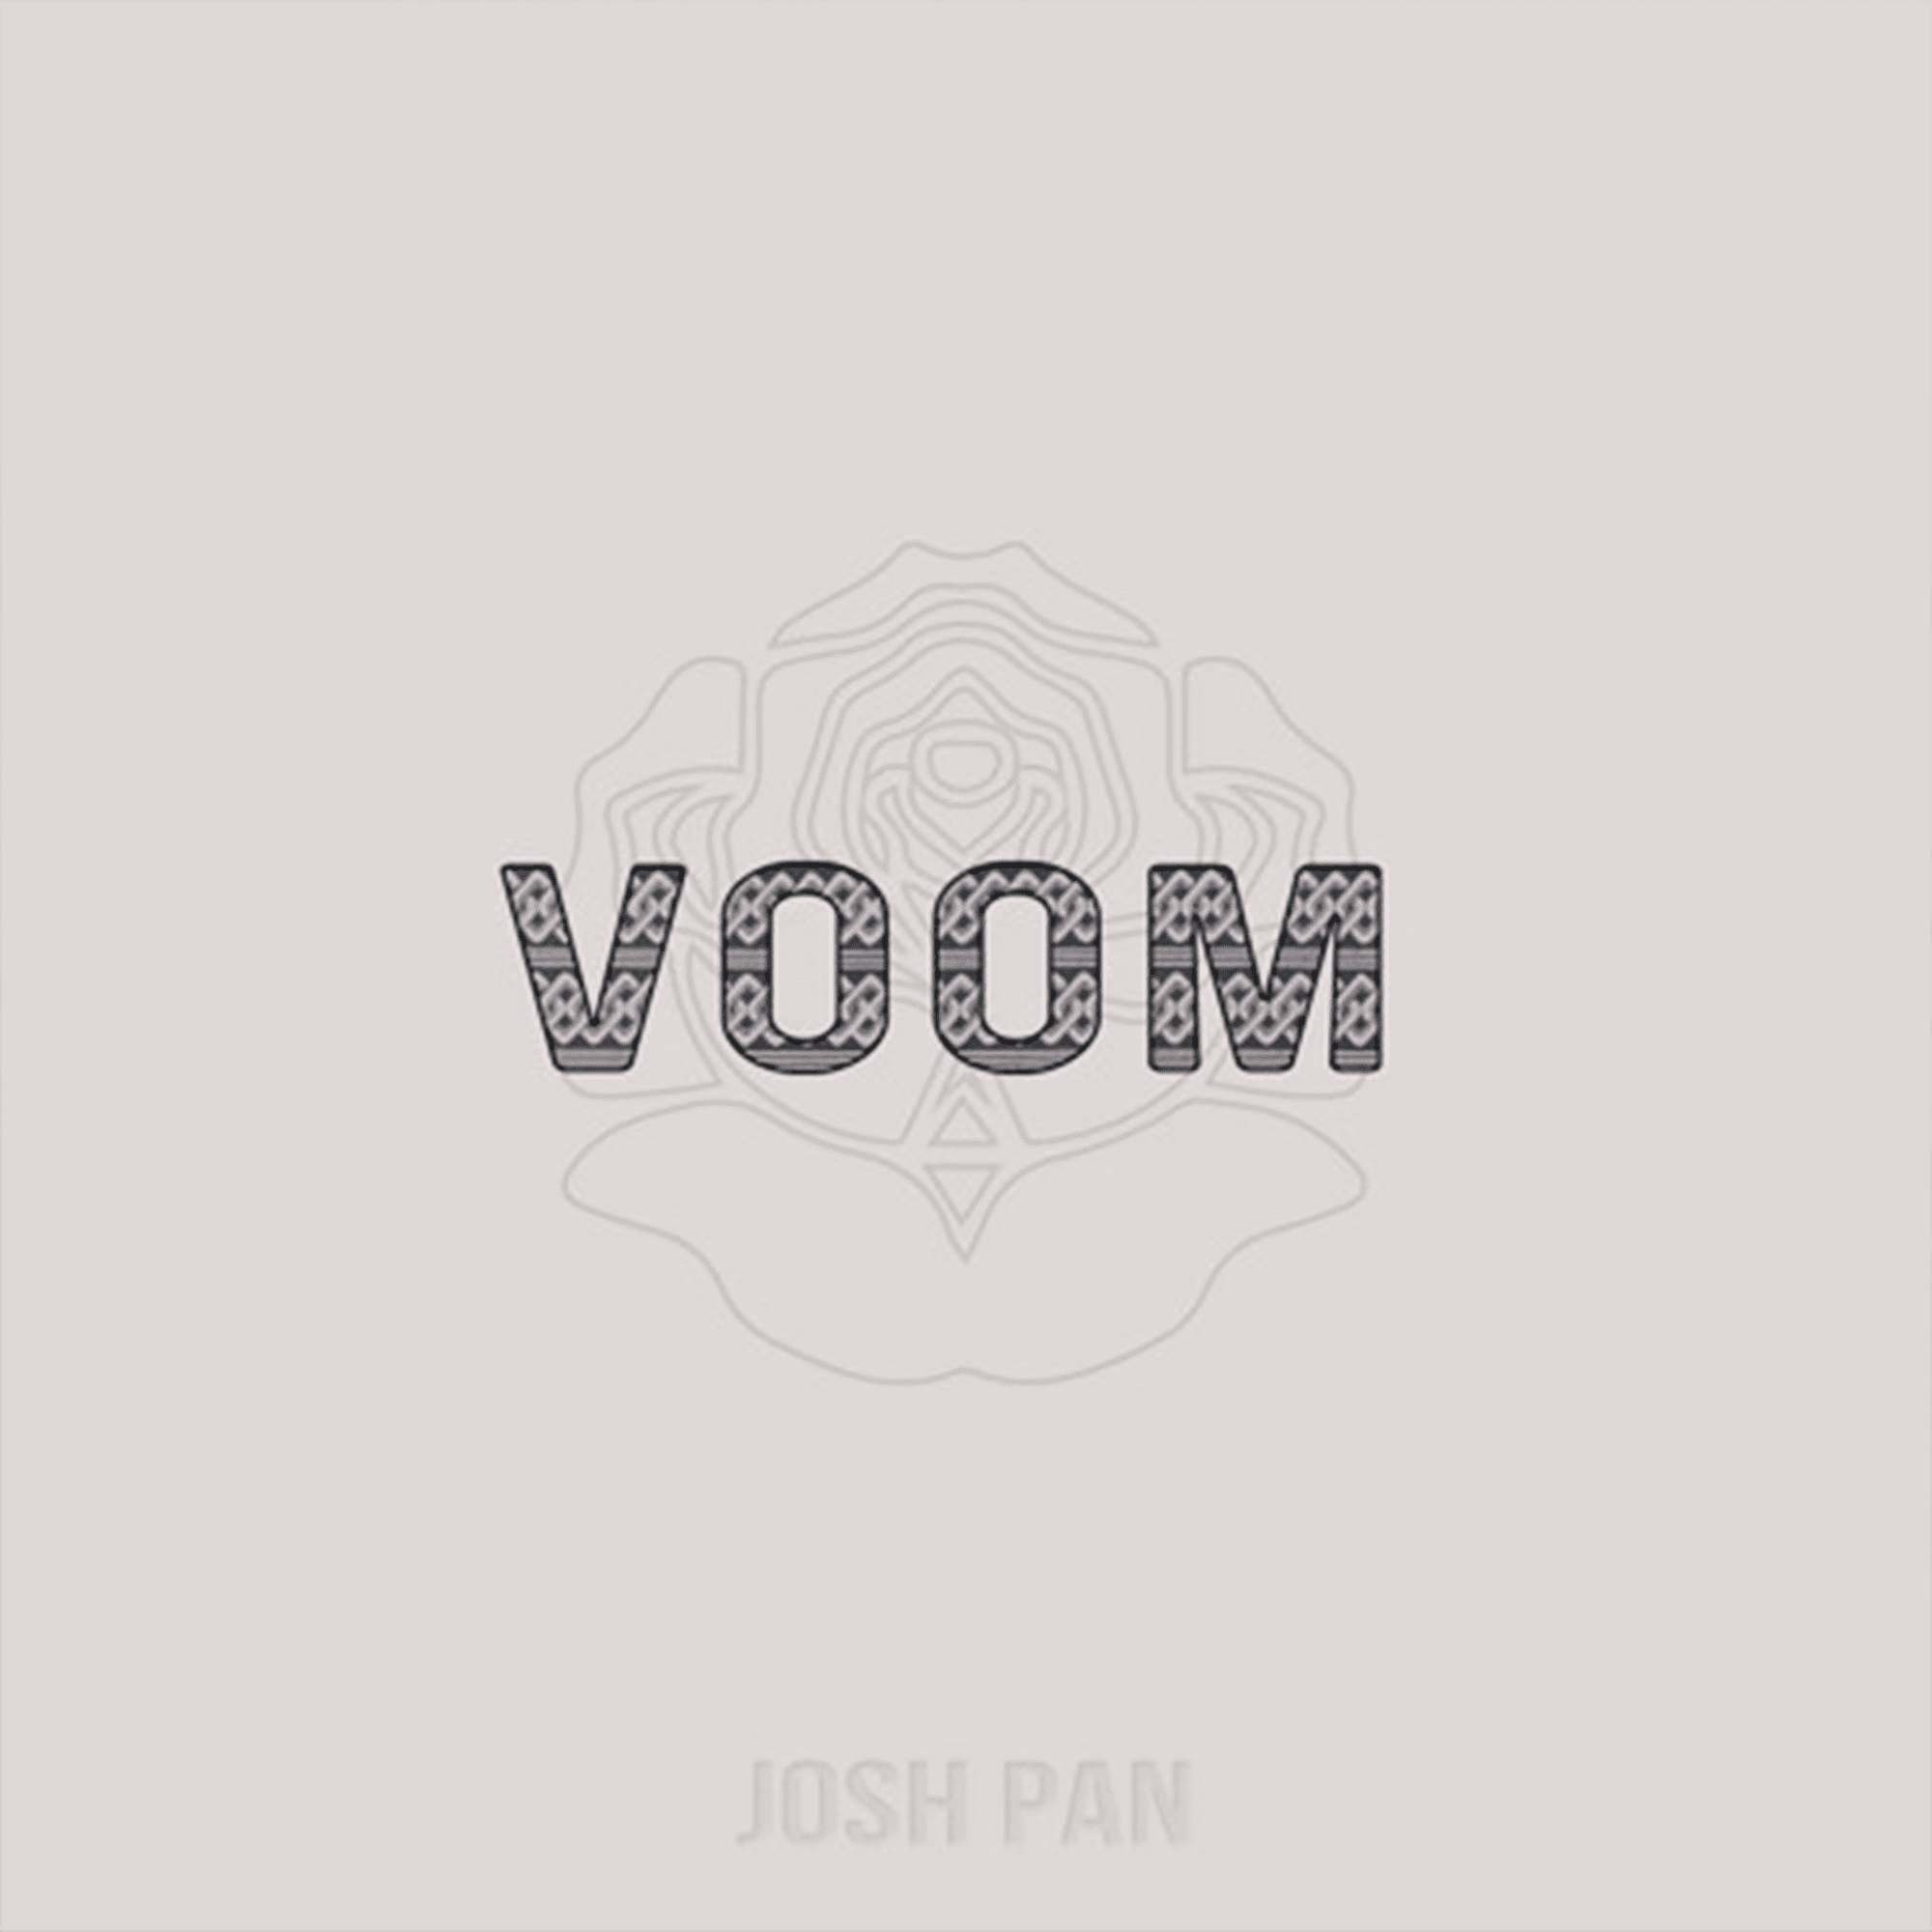 Cover art for josh pan's song: VOOM